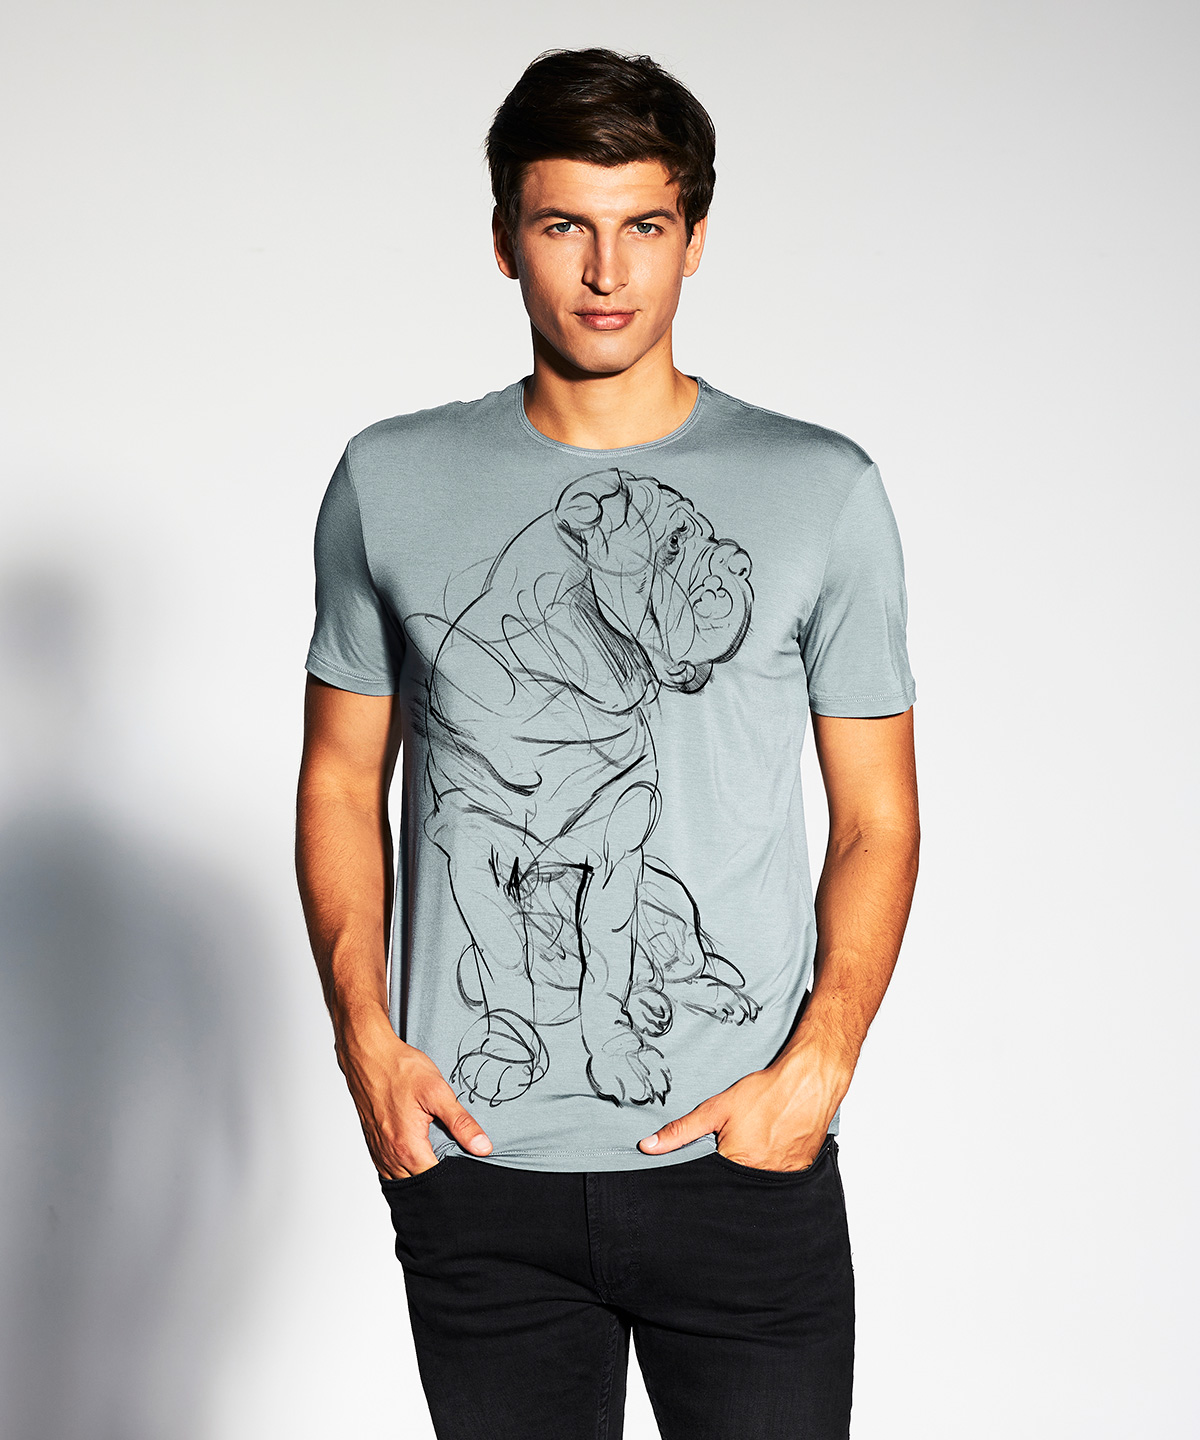 Neapolitan mastiff storm cloud t-shirt MAN